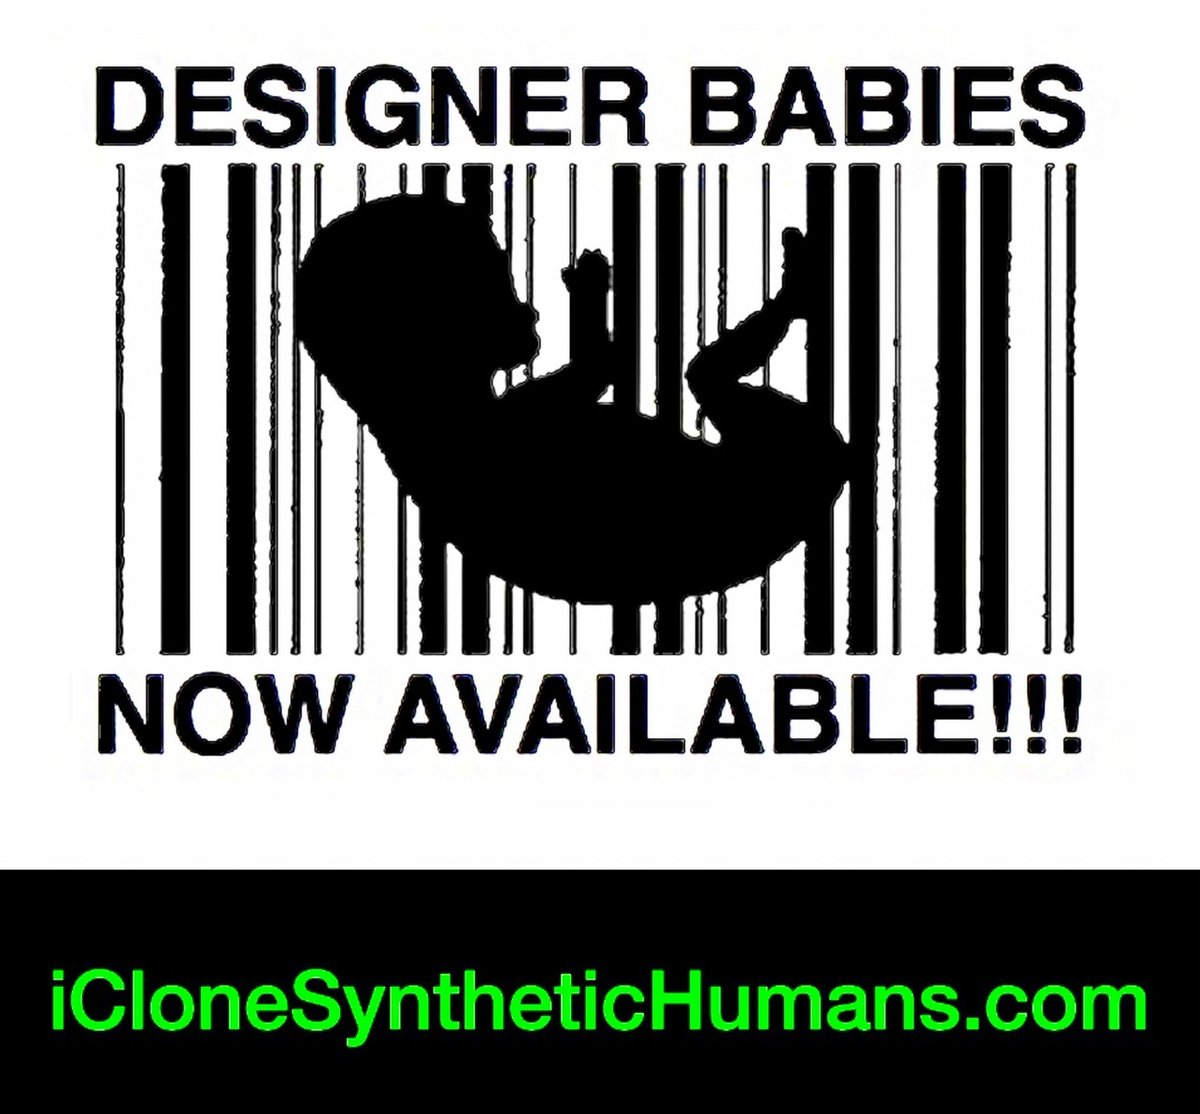 #Biotechnology #dna #artificalintelligence #chatgpt #ELON #elonmusk #genetics  #medical #clones #humans #cloning #futurehumans #humanity #fertility #aging #biotech #geneticengineering #embryos #medicalstudents #life #crispr #crisprcas9 #stemcells #TechInnovation #synthetichumans